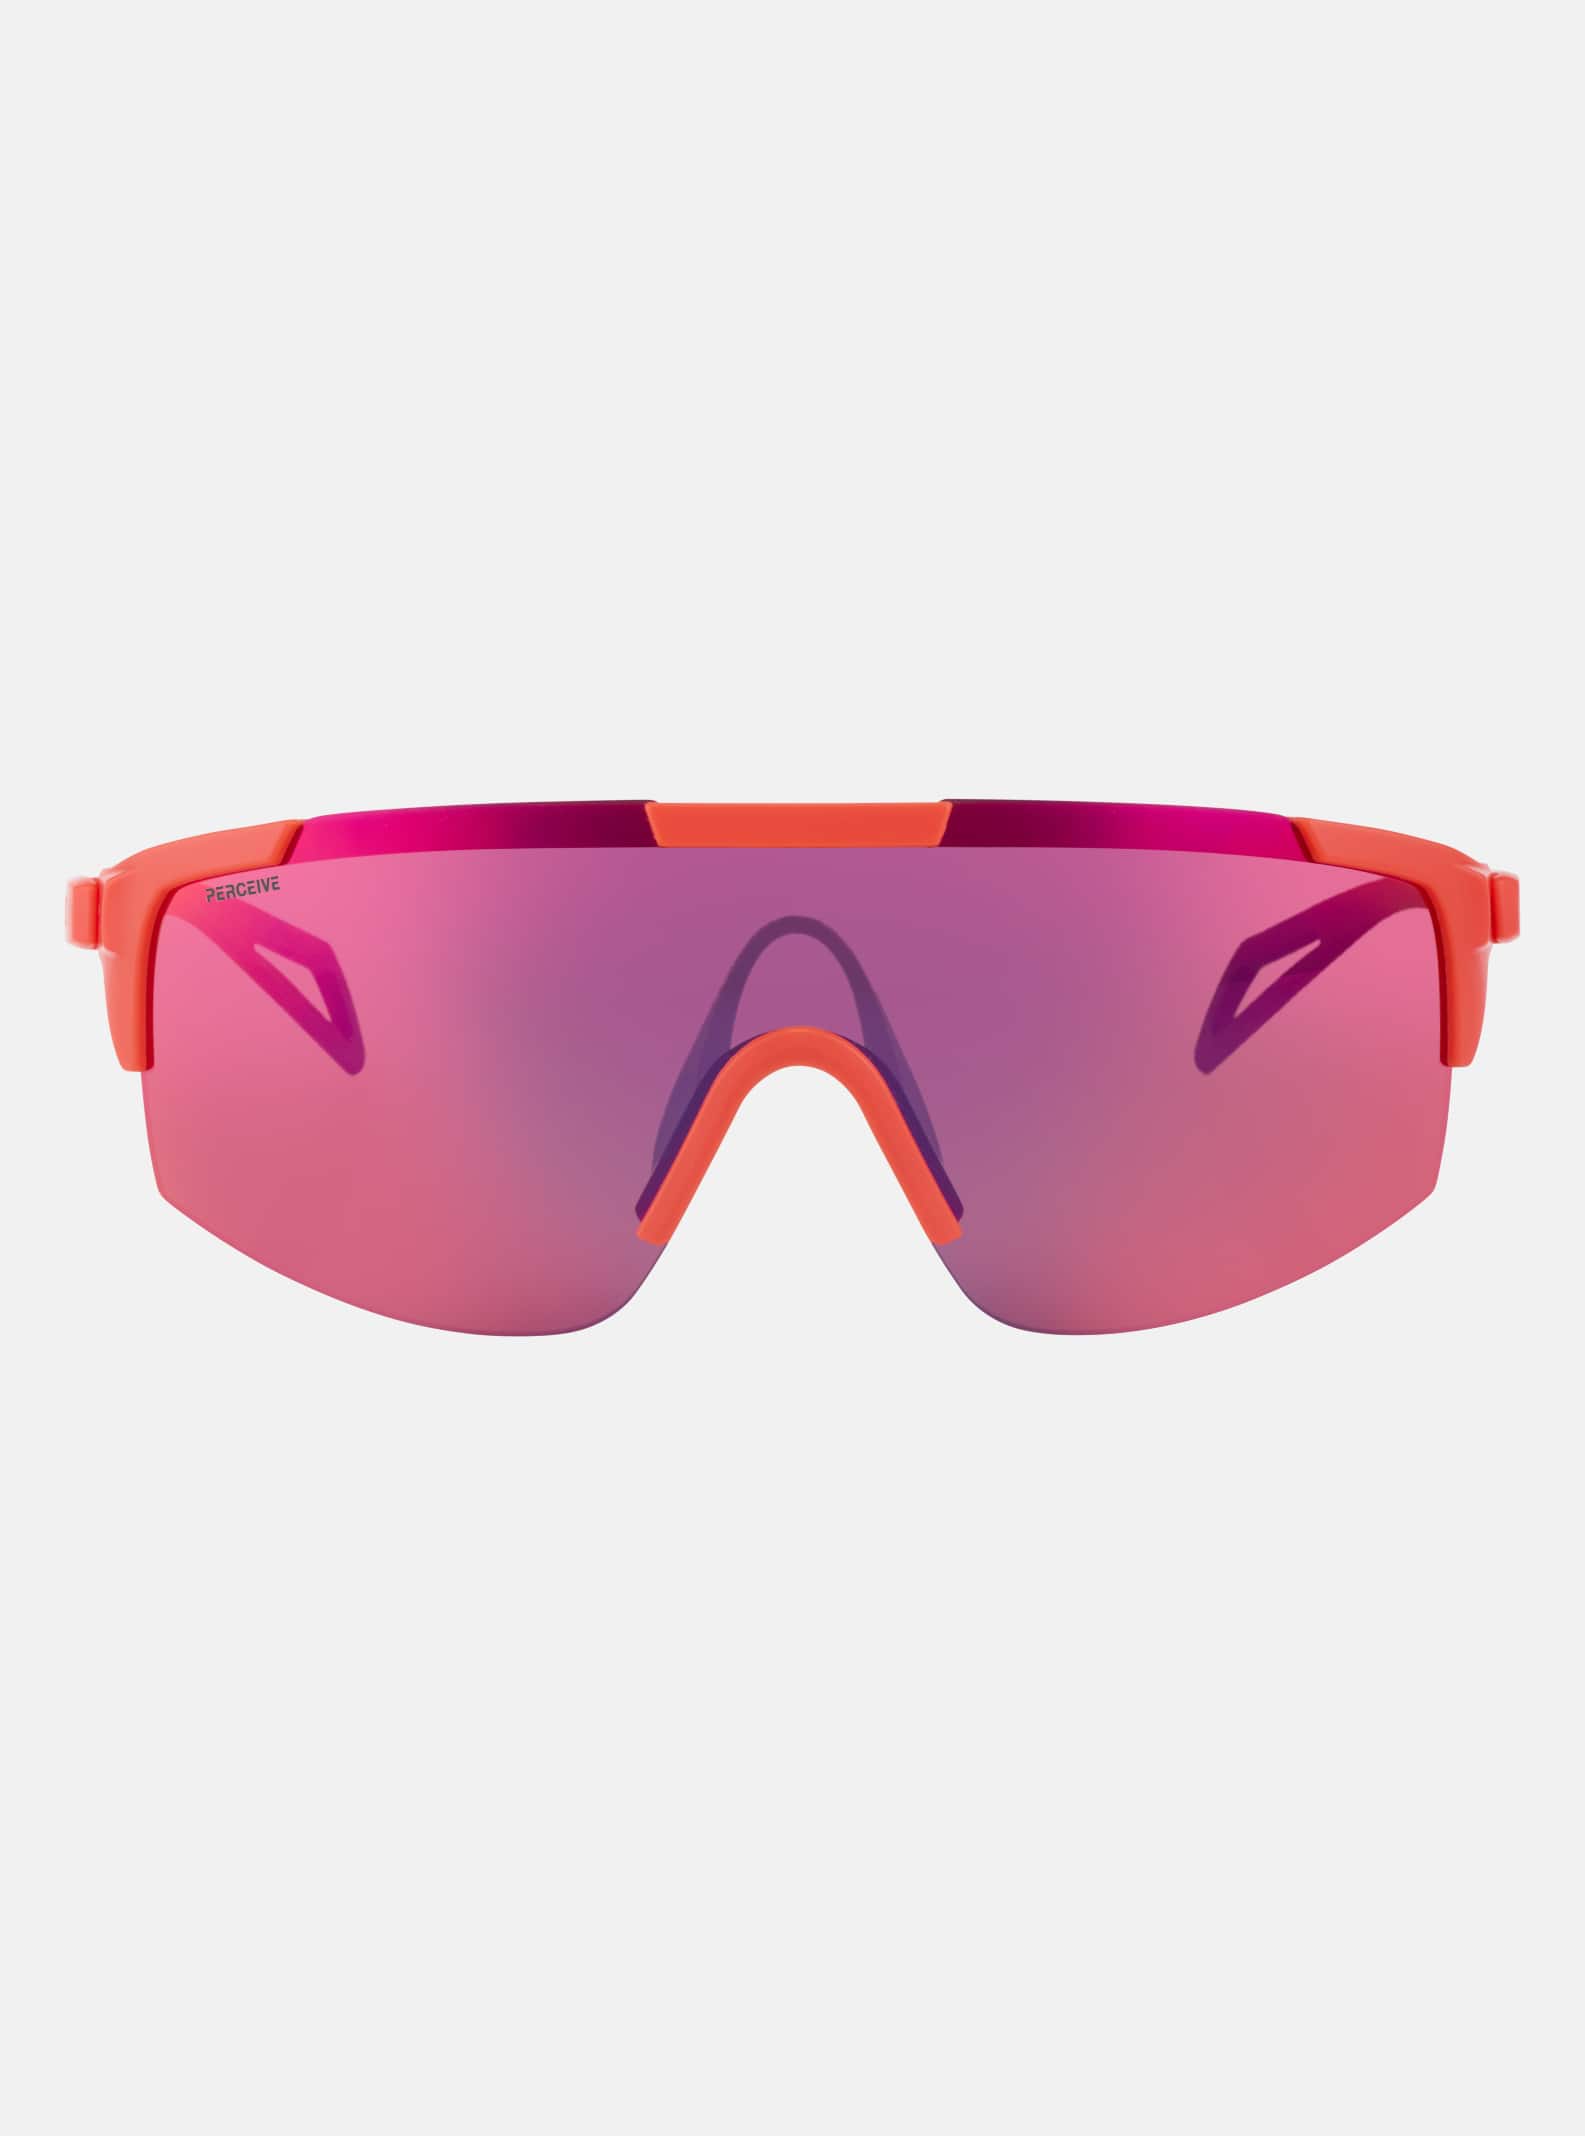 Anon Winderness Sunglasses | Burton.com Spring 2022 US